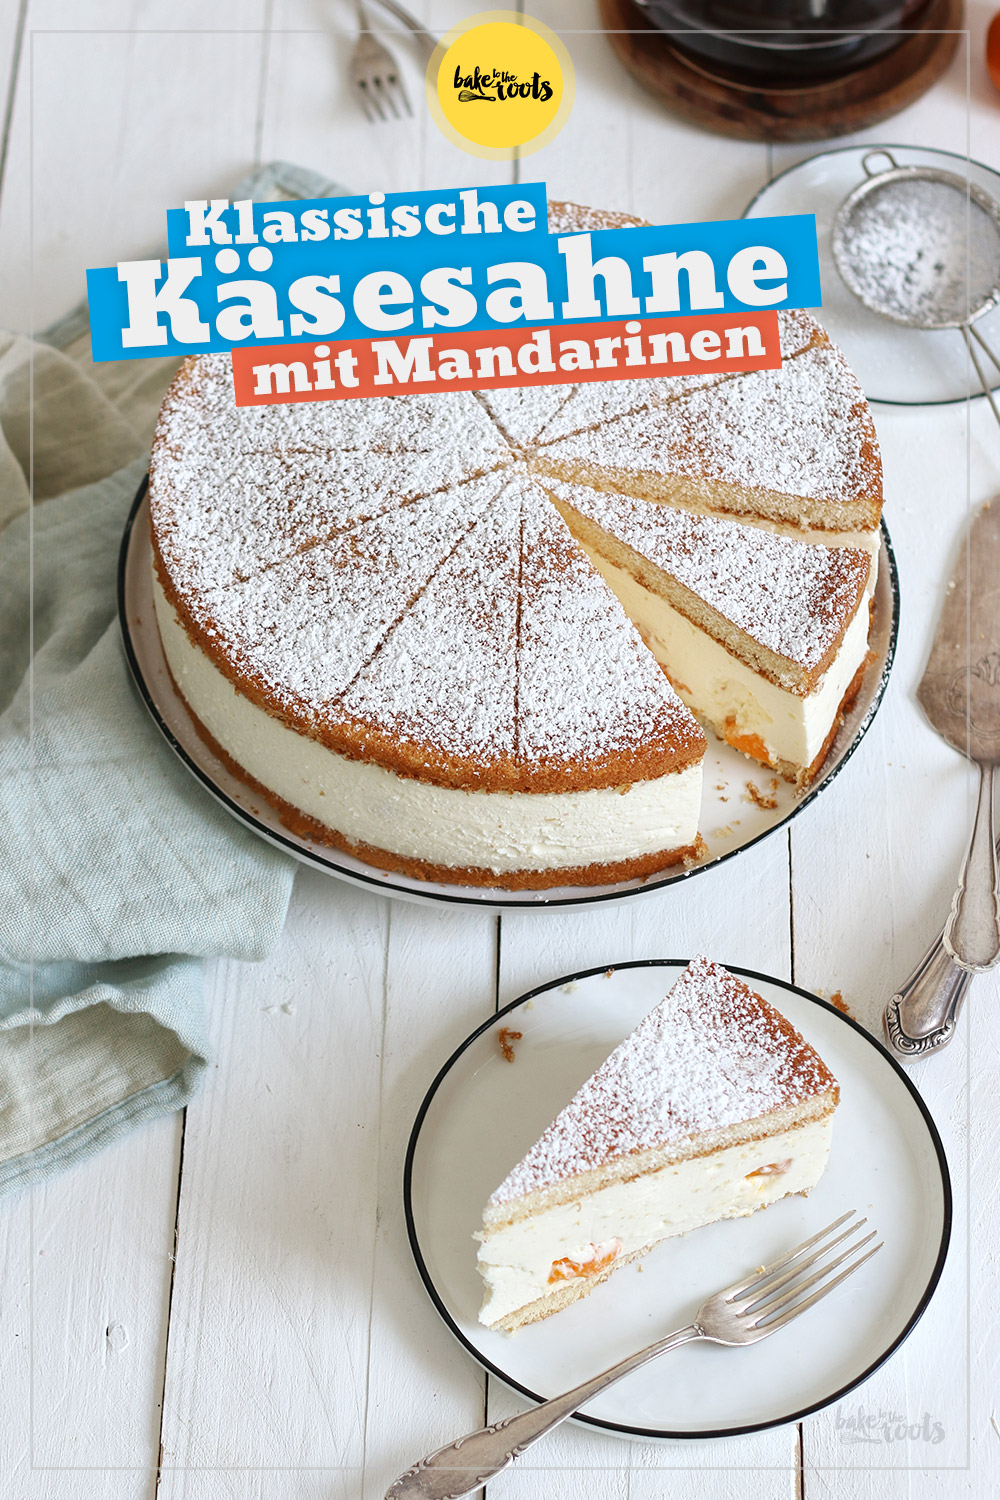 Käsesahnetorte mit Mandarinen | Bake to the roots